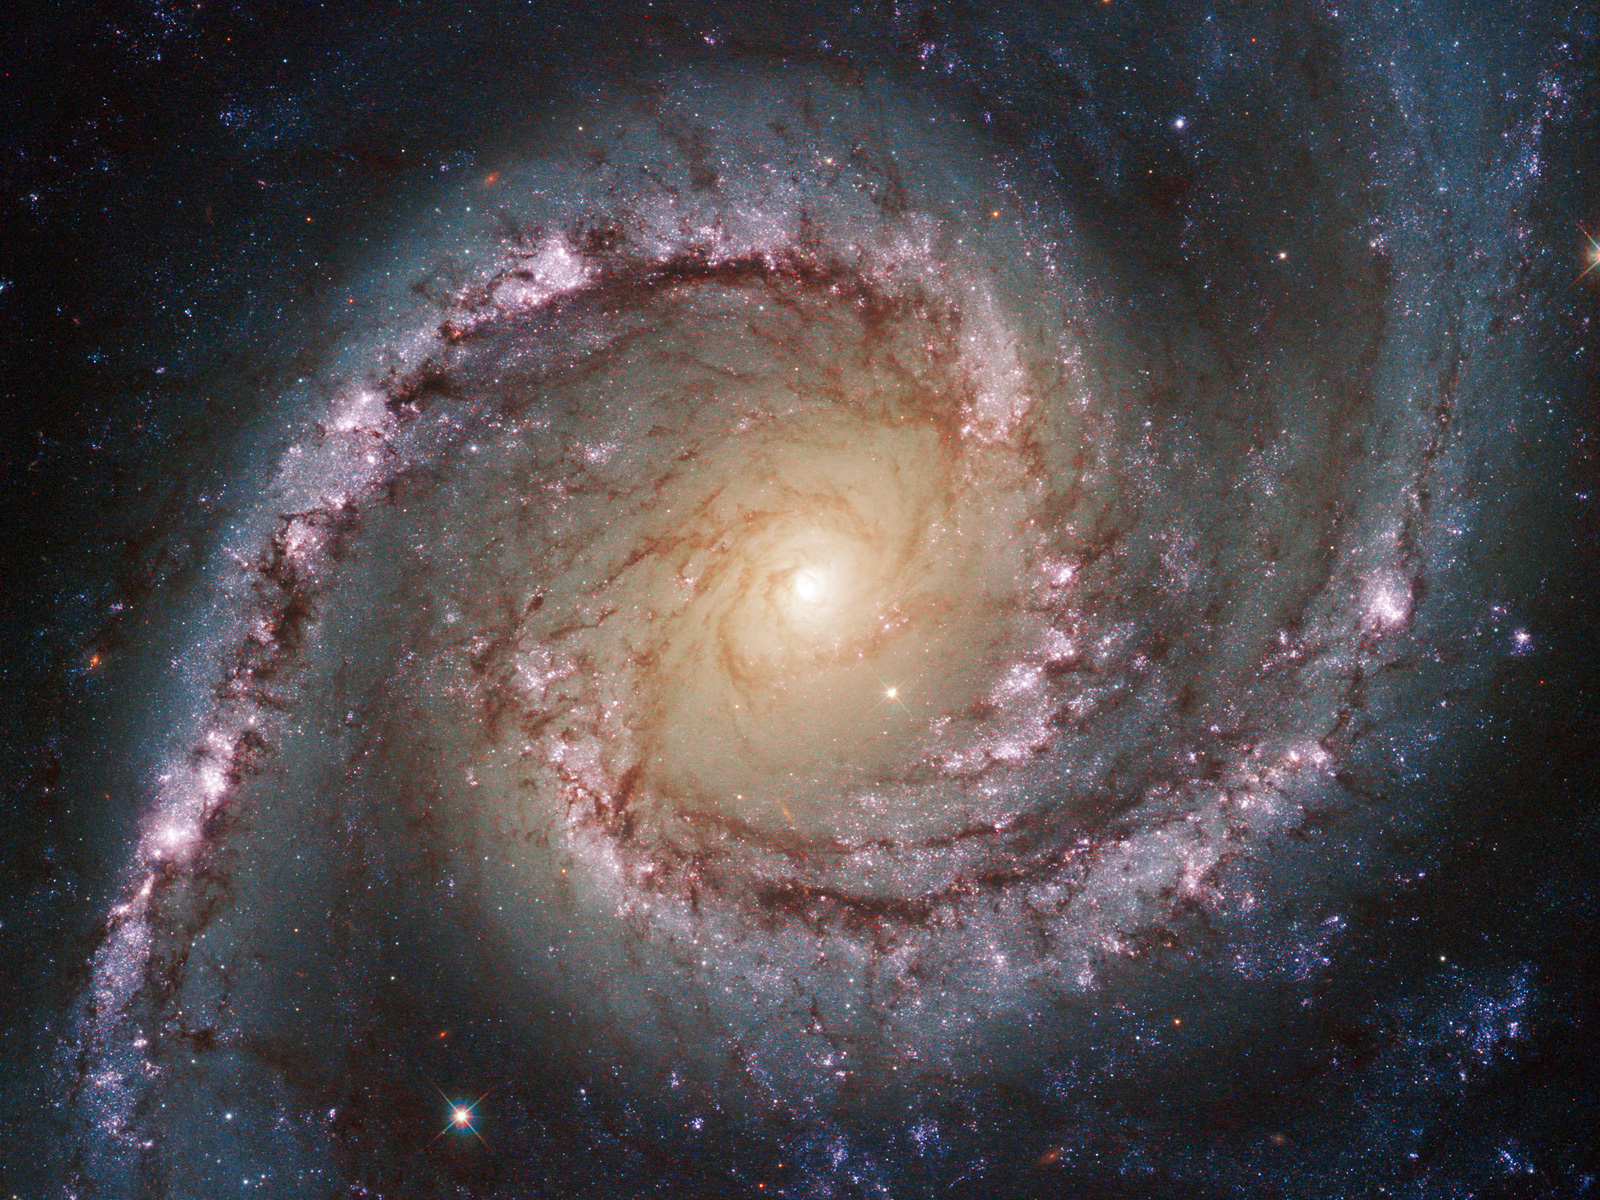 Grand Swirls Esa Hubble